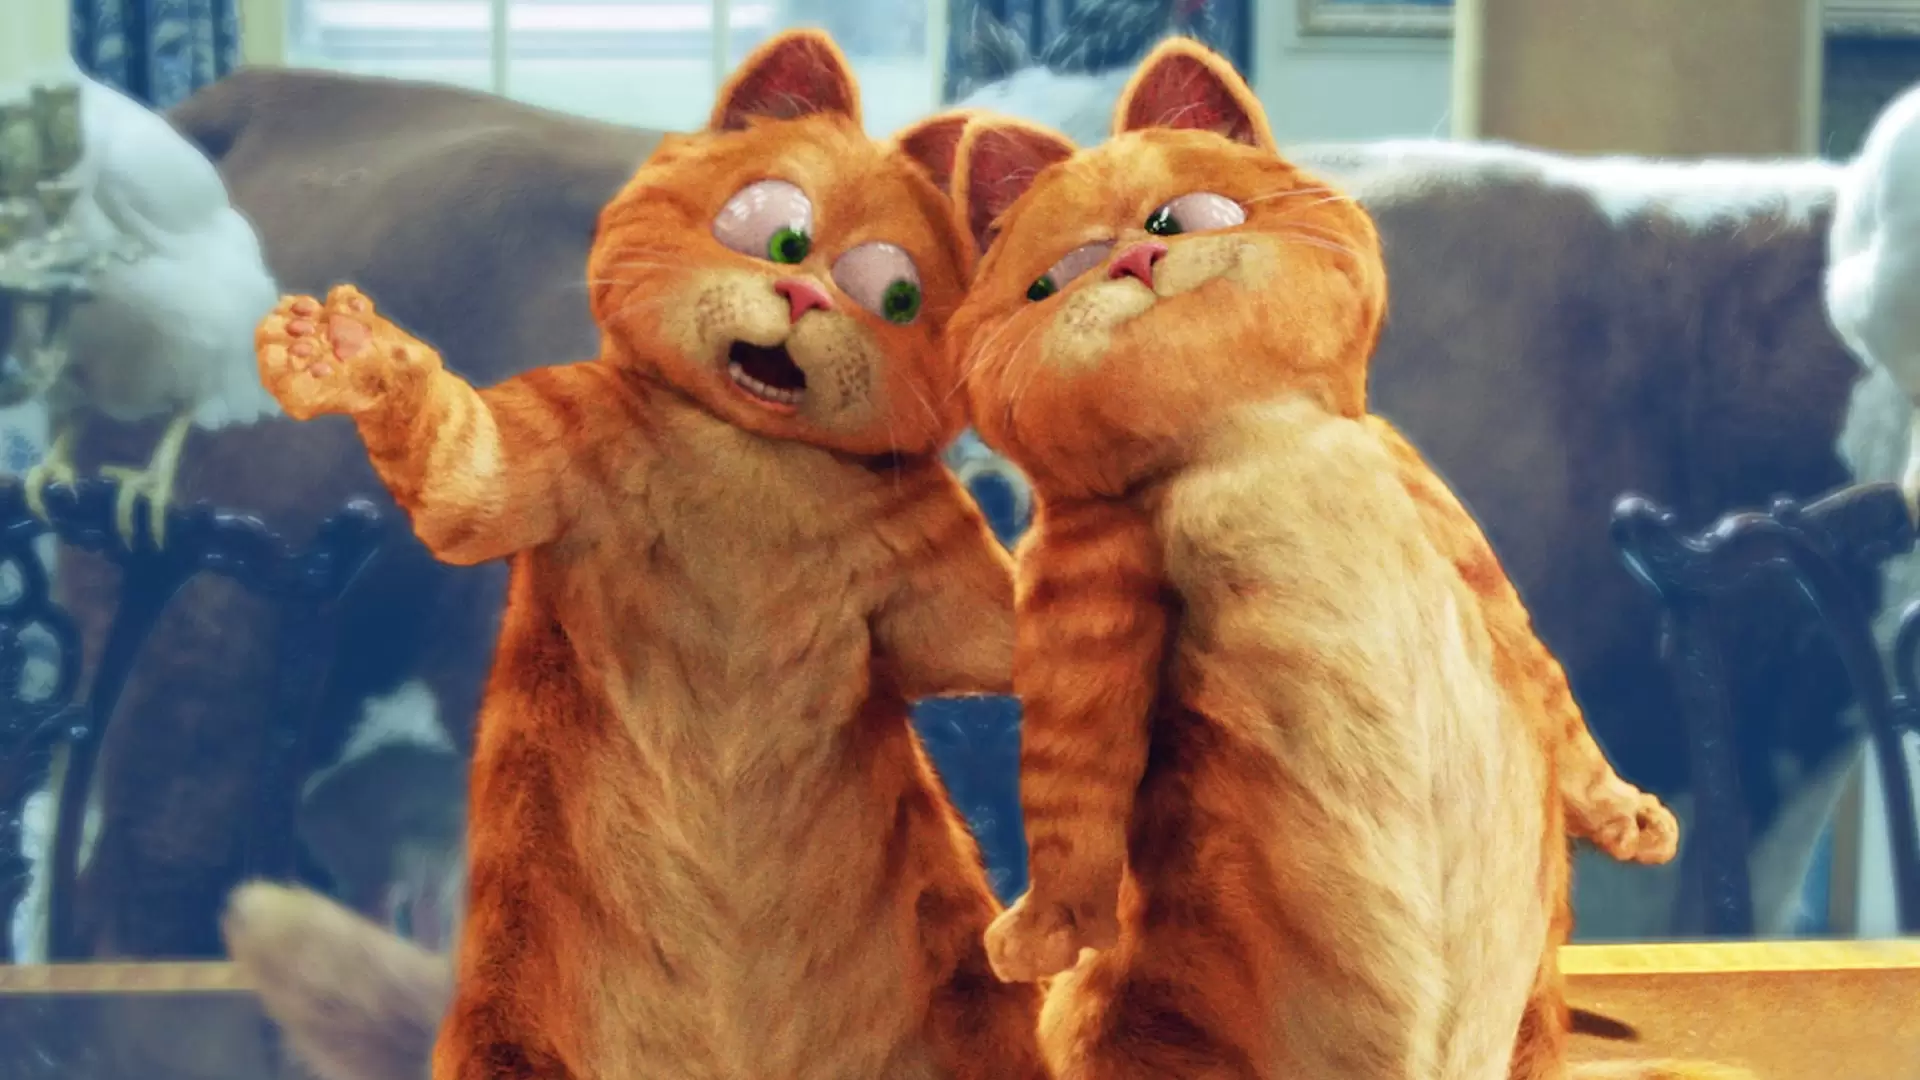 دانلود فیلم Garfield: A Tail of Two Kitties 2006 با زیرنویس فارسی و تماشای آنلاین